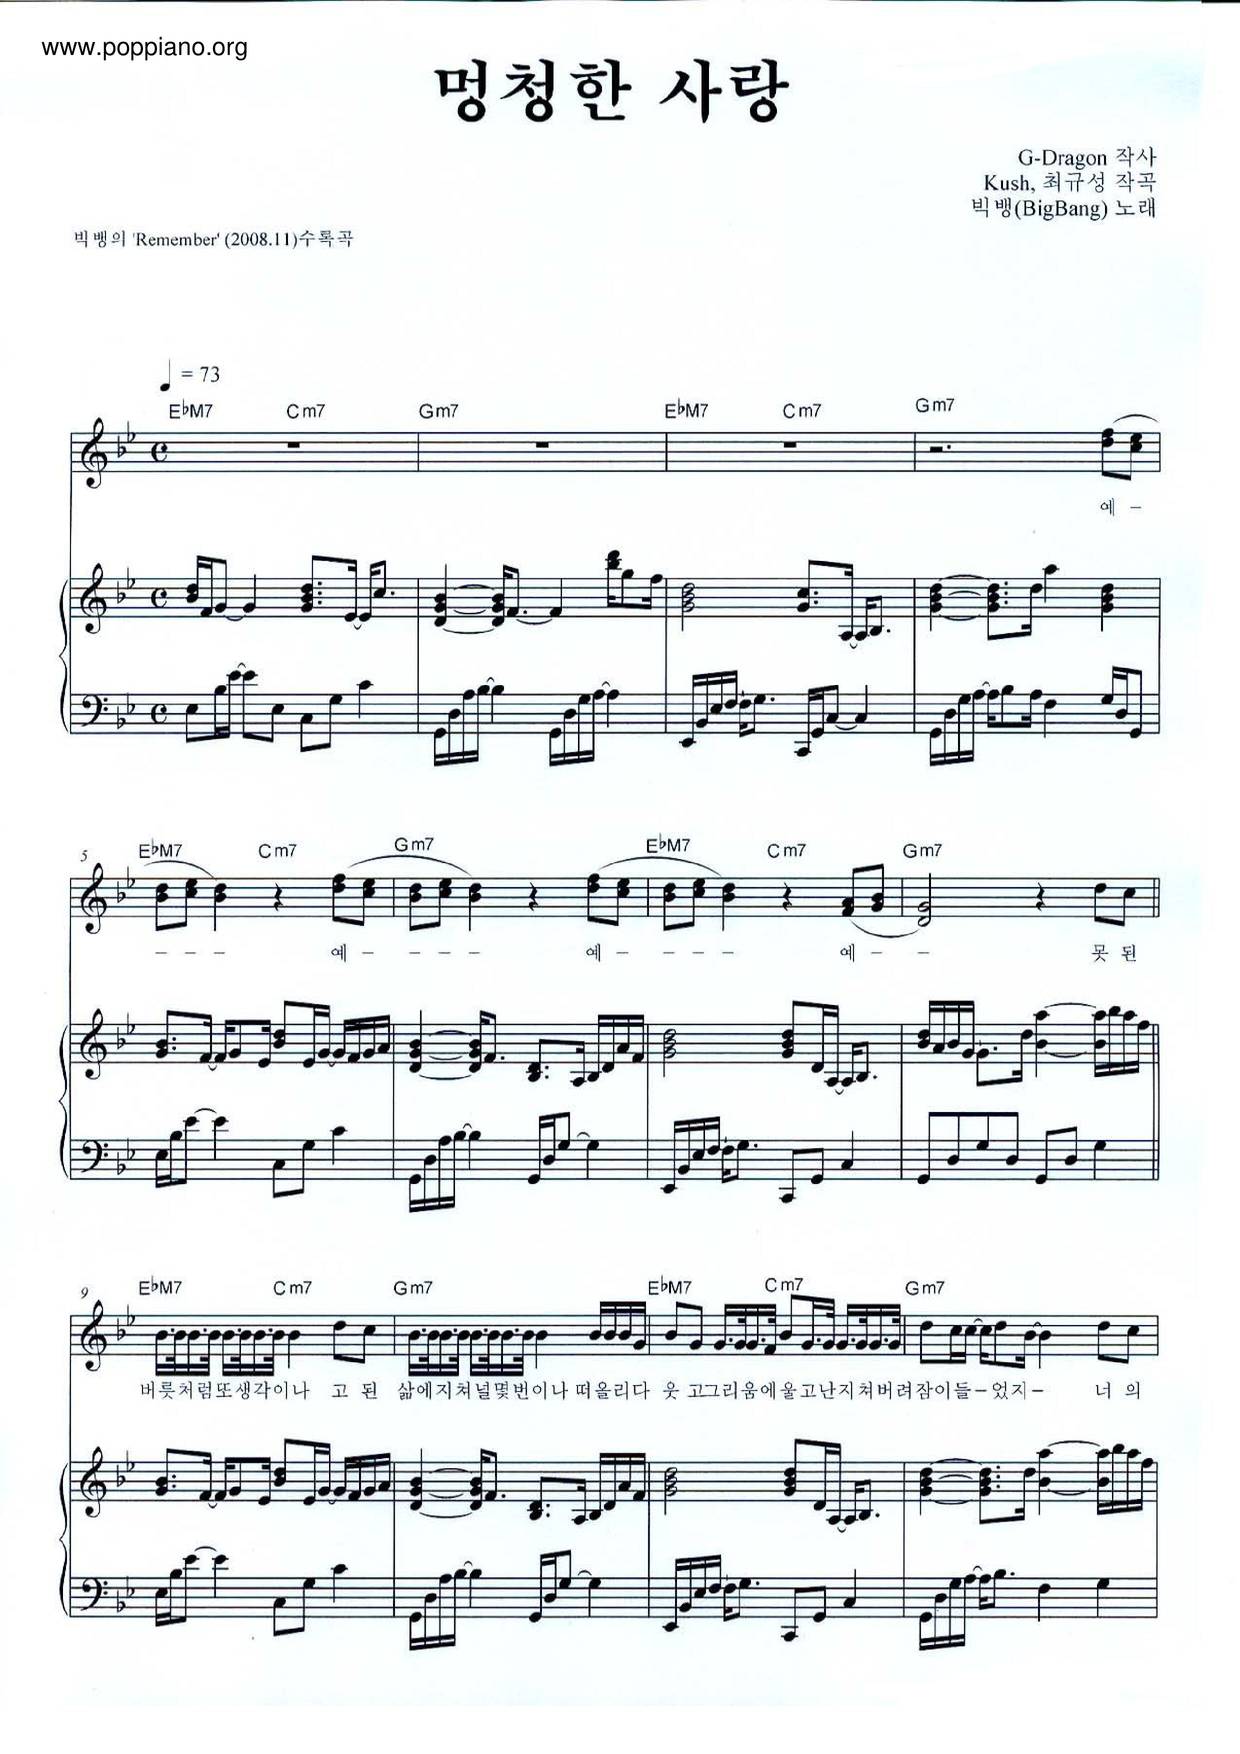 Mung Chung Han Sarangピアノ譜